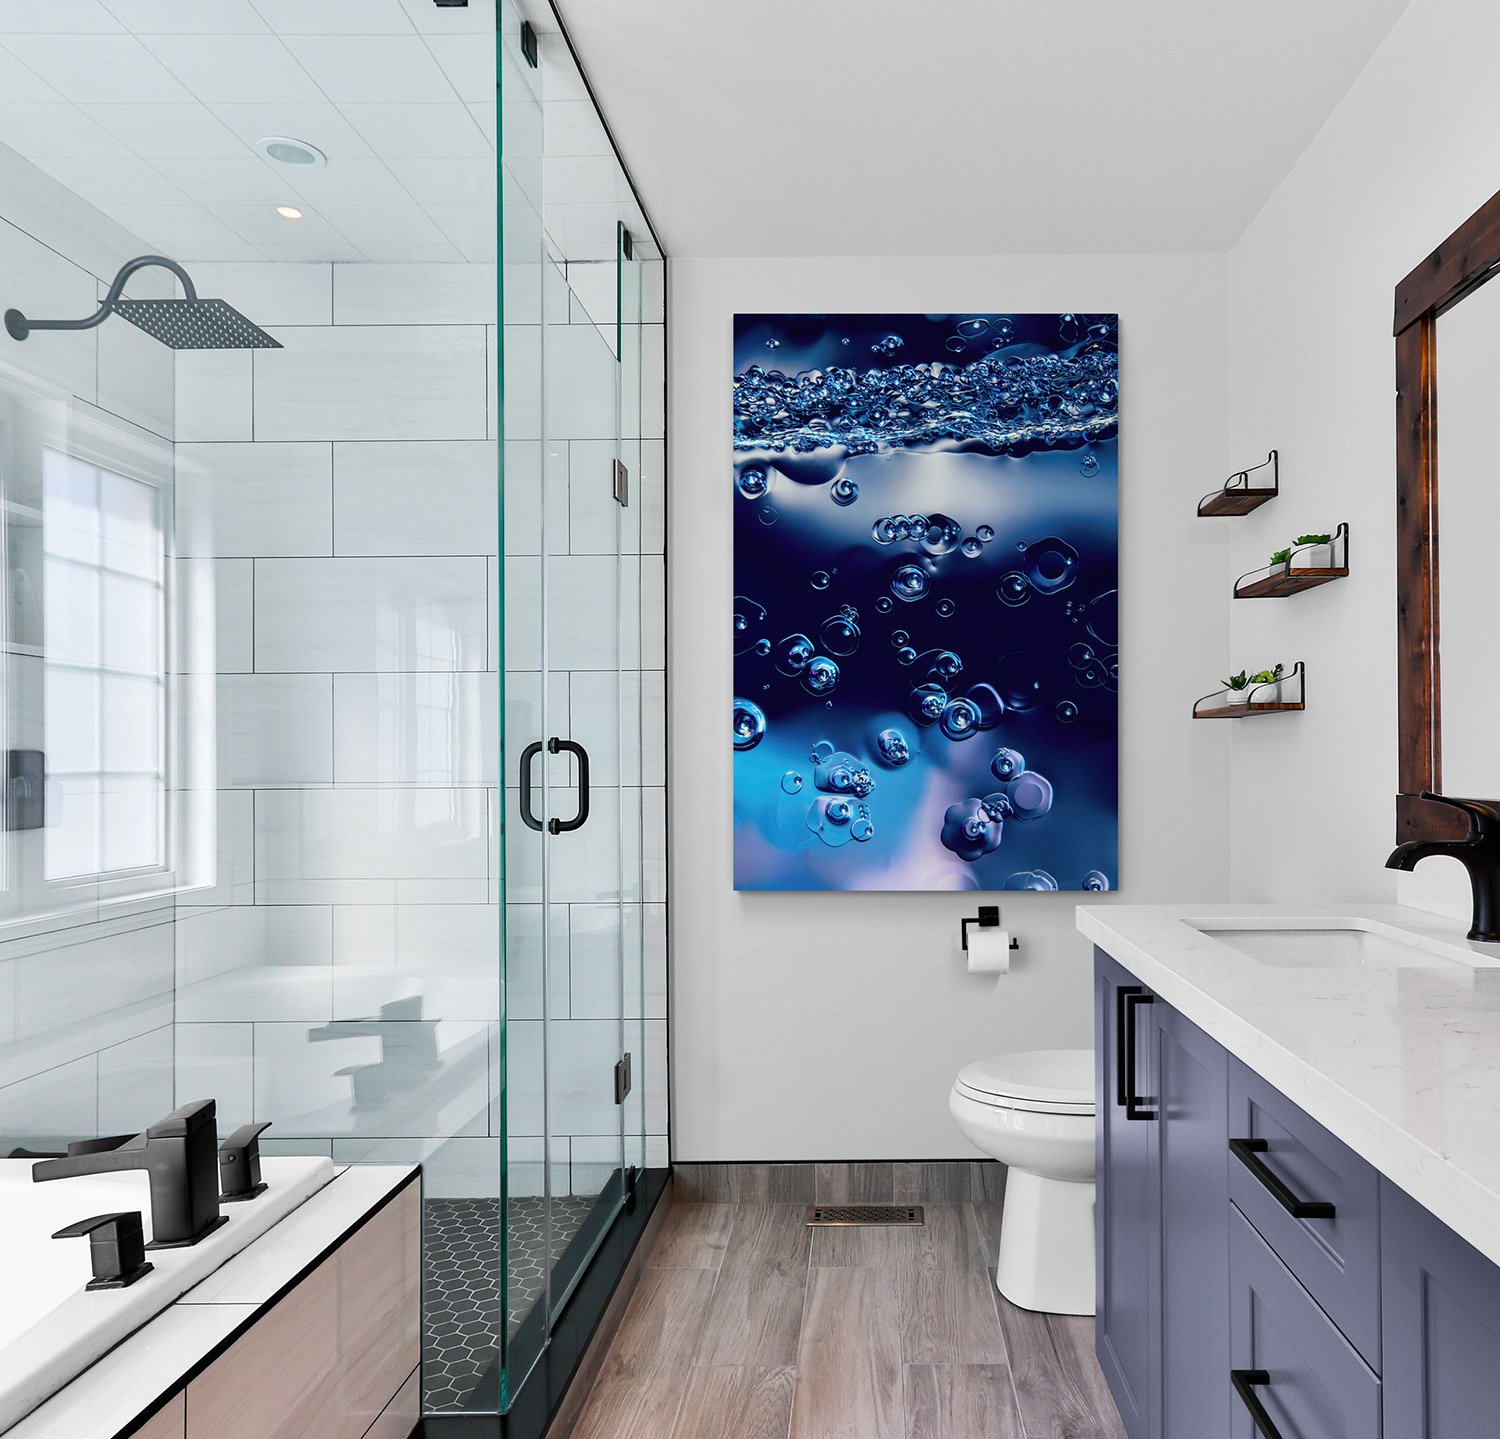 Bathroom_interior_with_large_glass_showeC.jpg